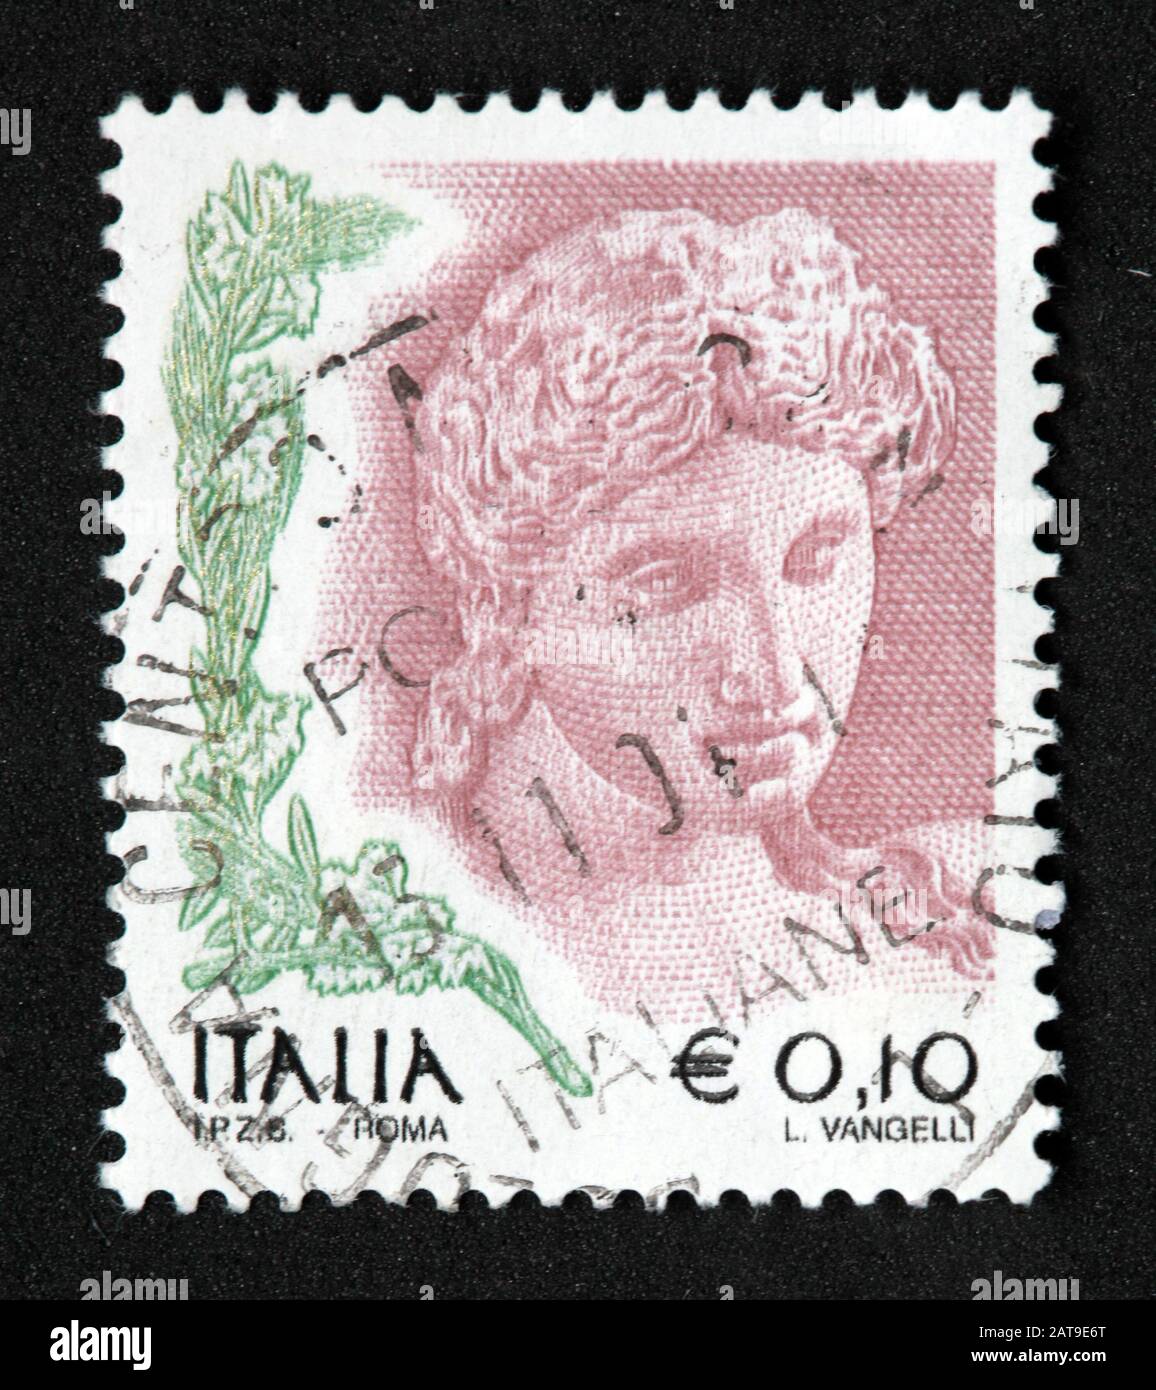 Timbre italien, poste Italia utilisé et franked Stamp, italia E0.10 L Vangelli Banque D'Images